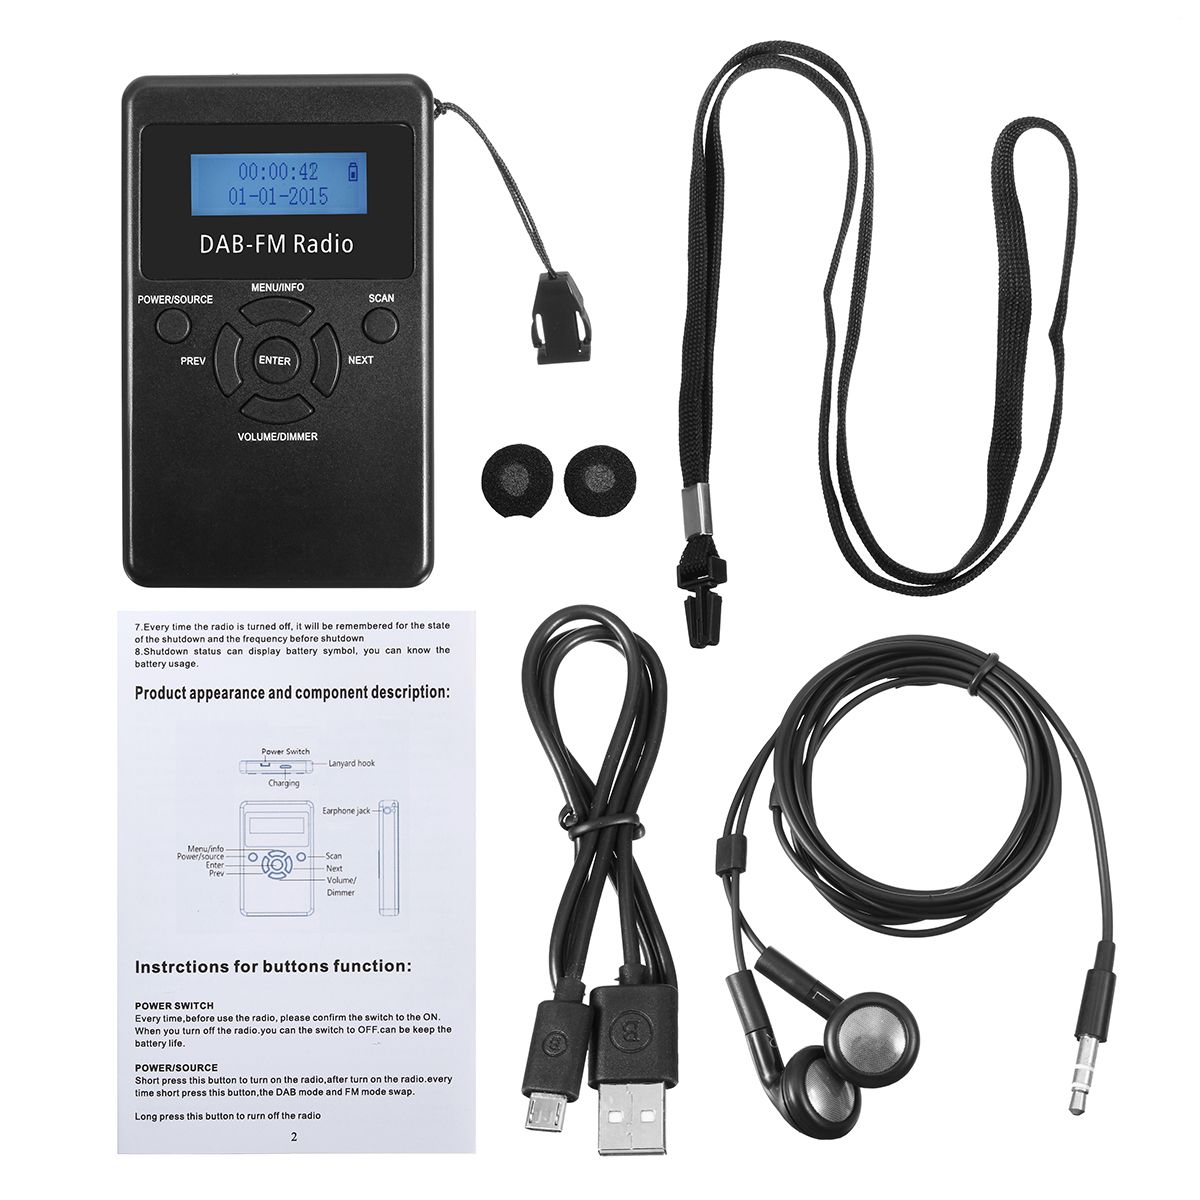 FMDAB-Radio-Portable-Digital-Audio-Broadcasting-Rechargeable-Receiver-Headphone-1232955